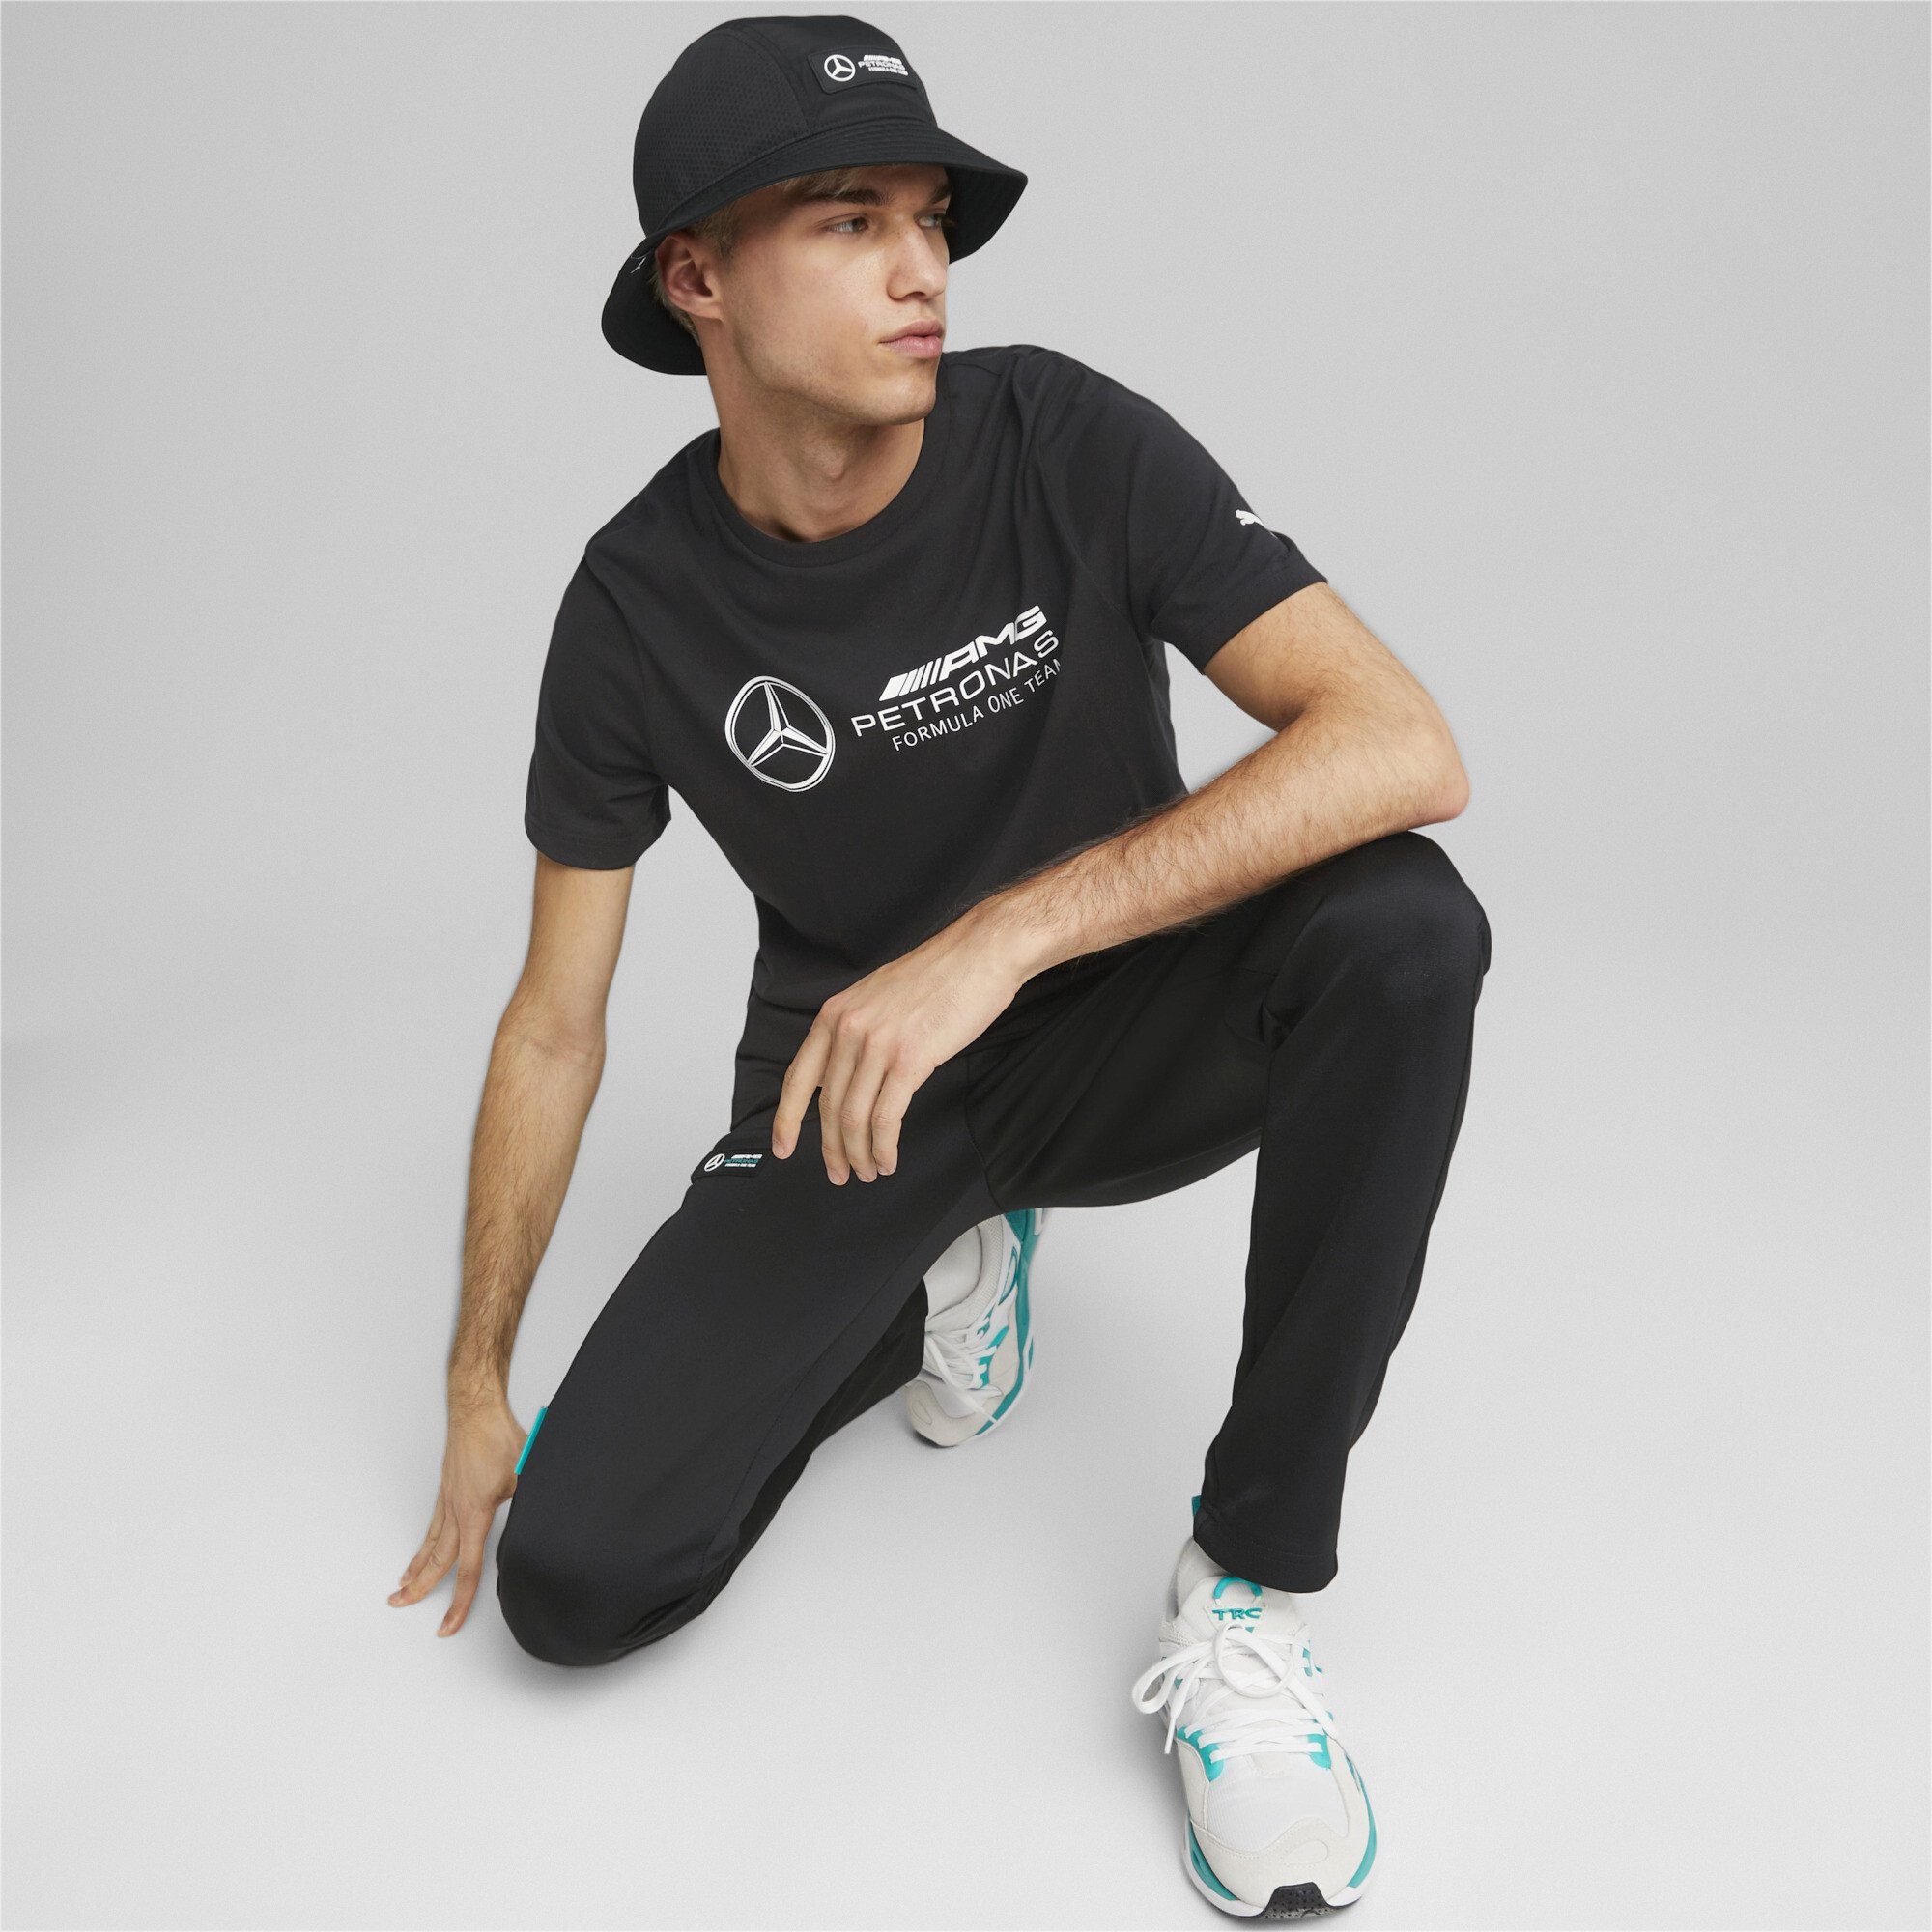 Logo Mercedes-AMG Essentials Motorsport Herren PUMA Petronas T-Shirt Black T-Shirt